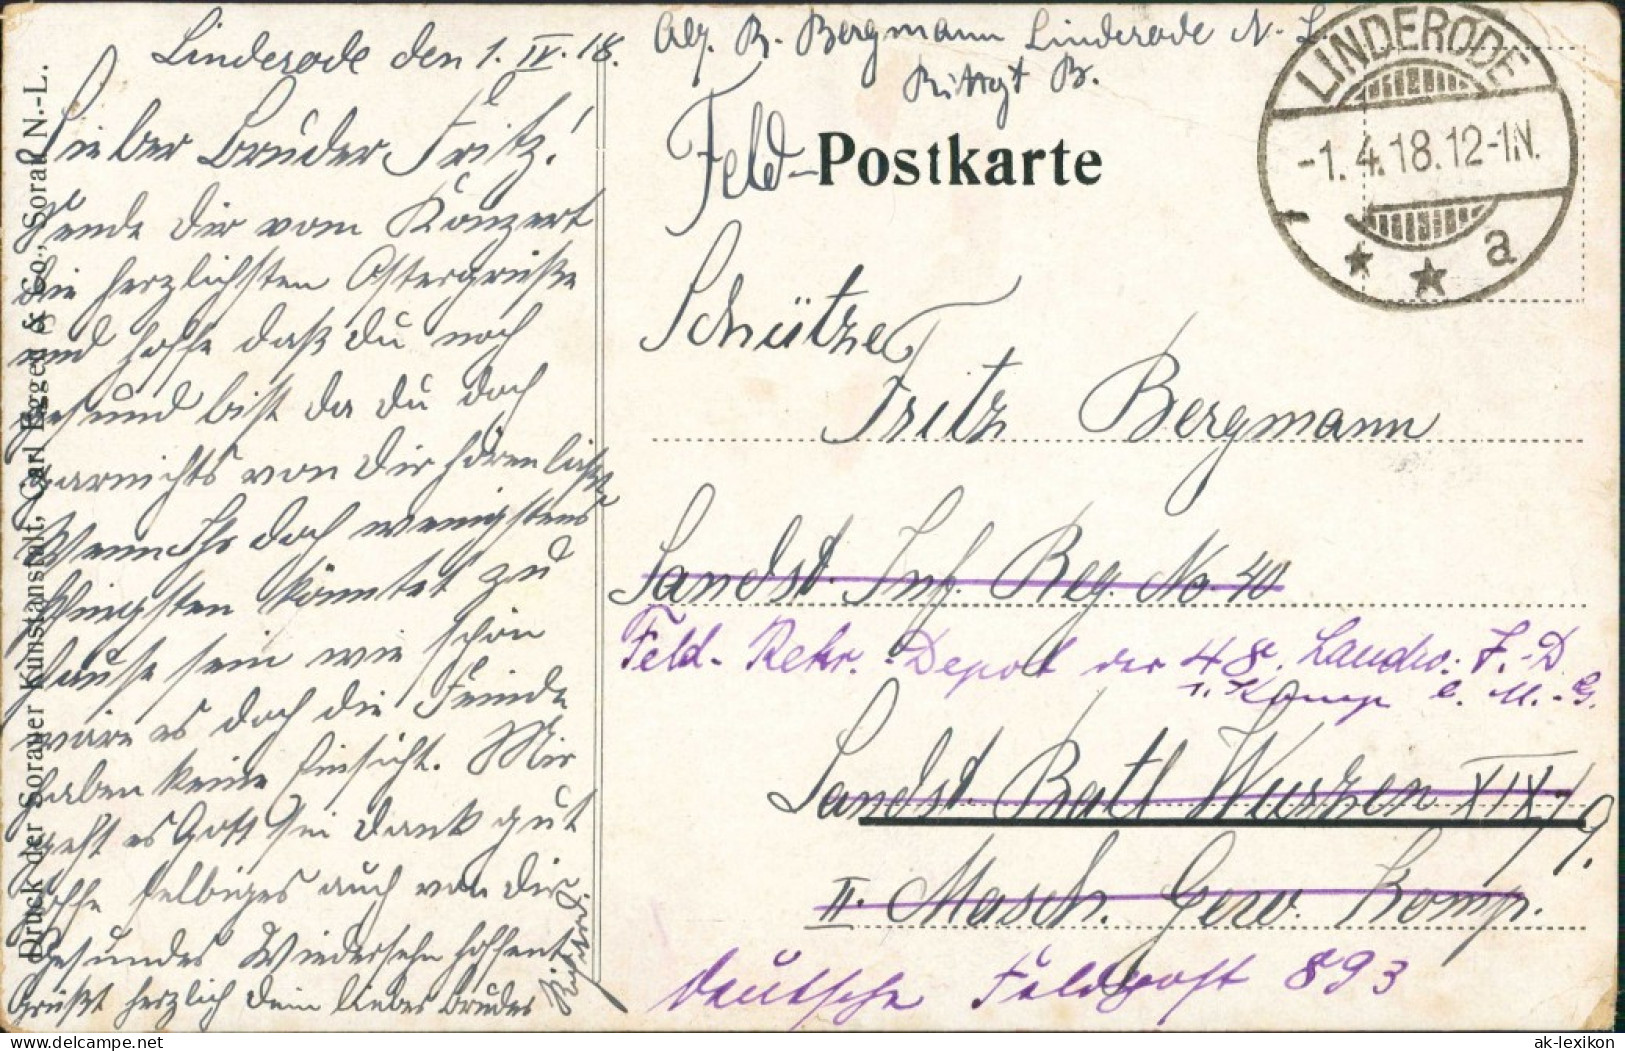 Schönwalde Neumark-Sternberg (Neumark) Prześlice Torzym Straße, Gasthof 1918 - Neumark